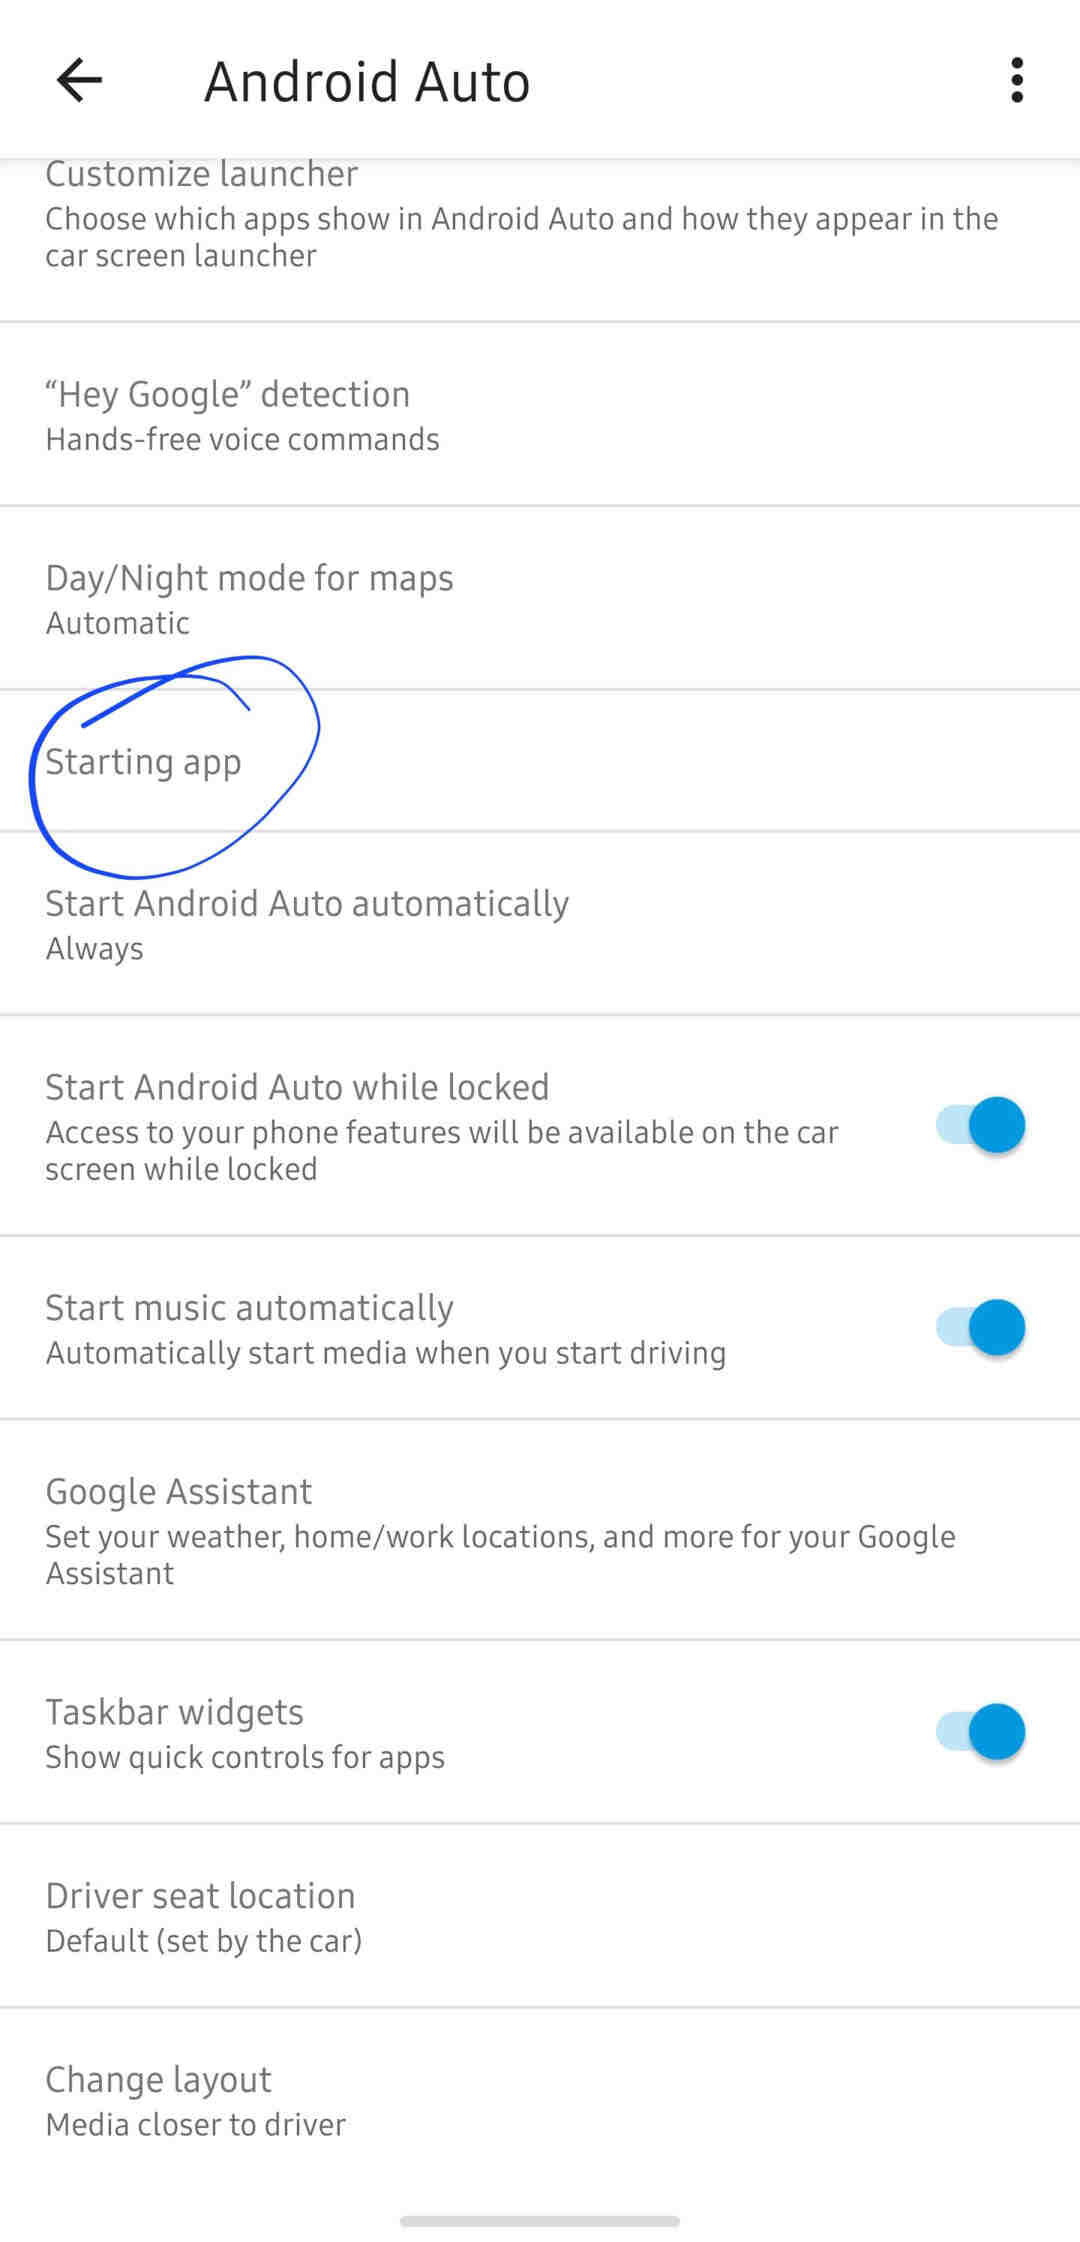 Android Auto 9.3 beta update